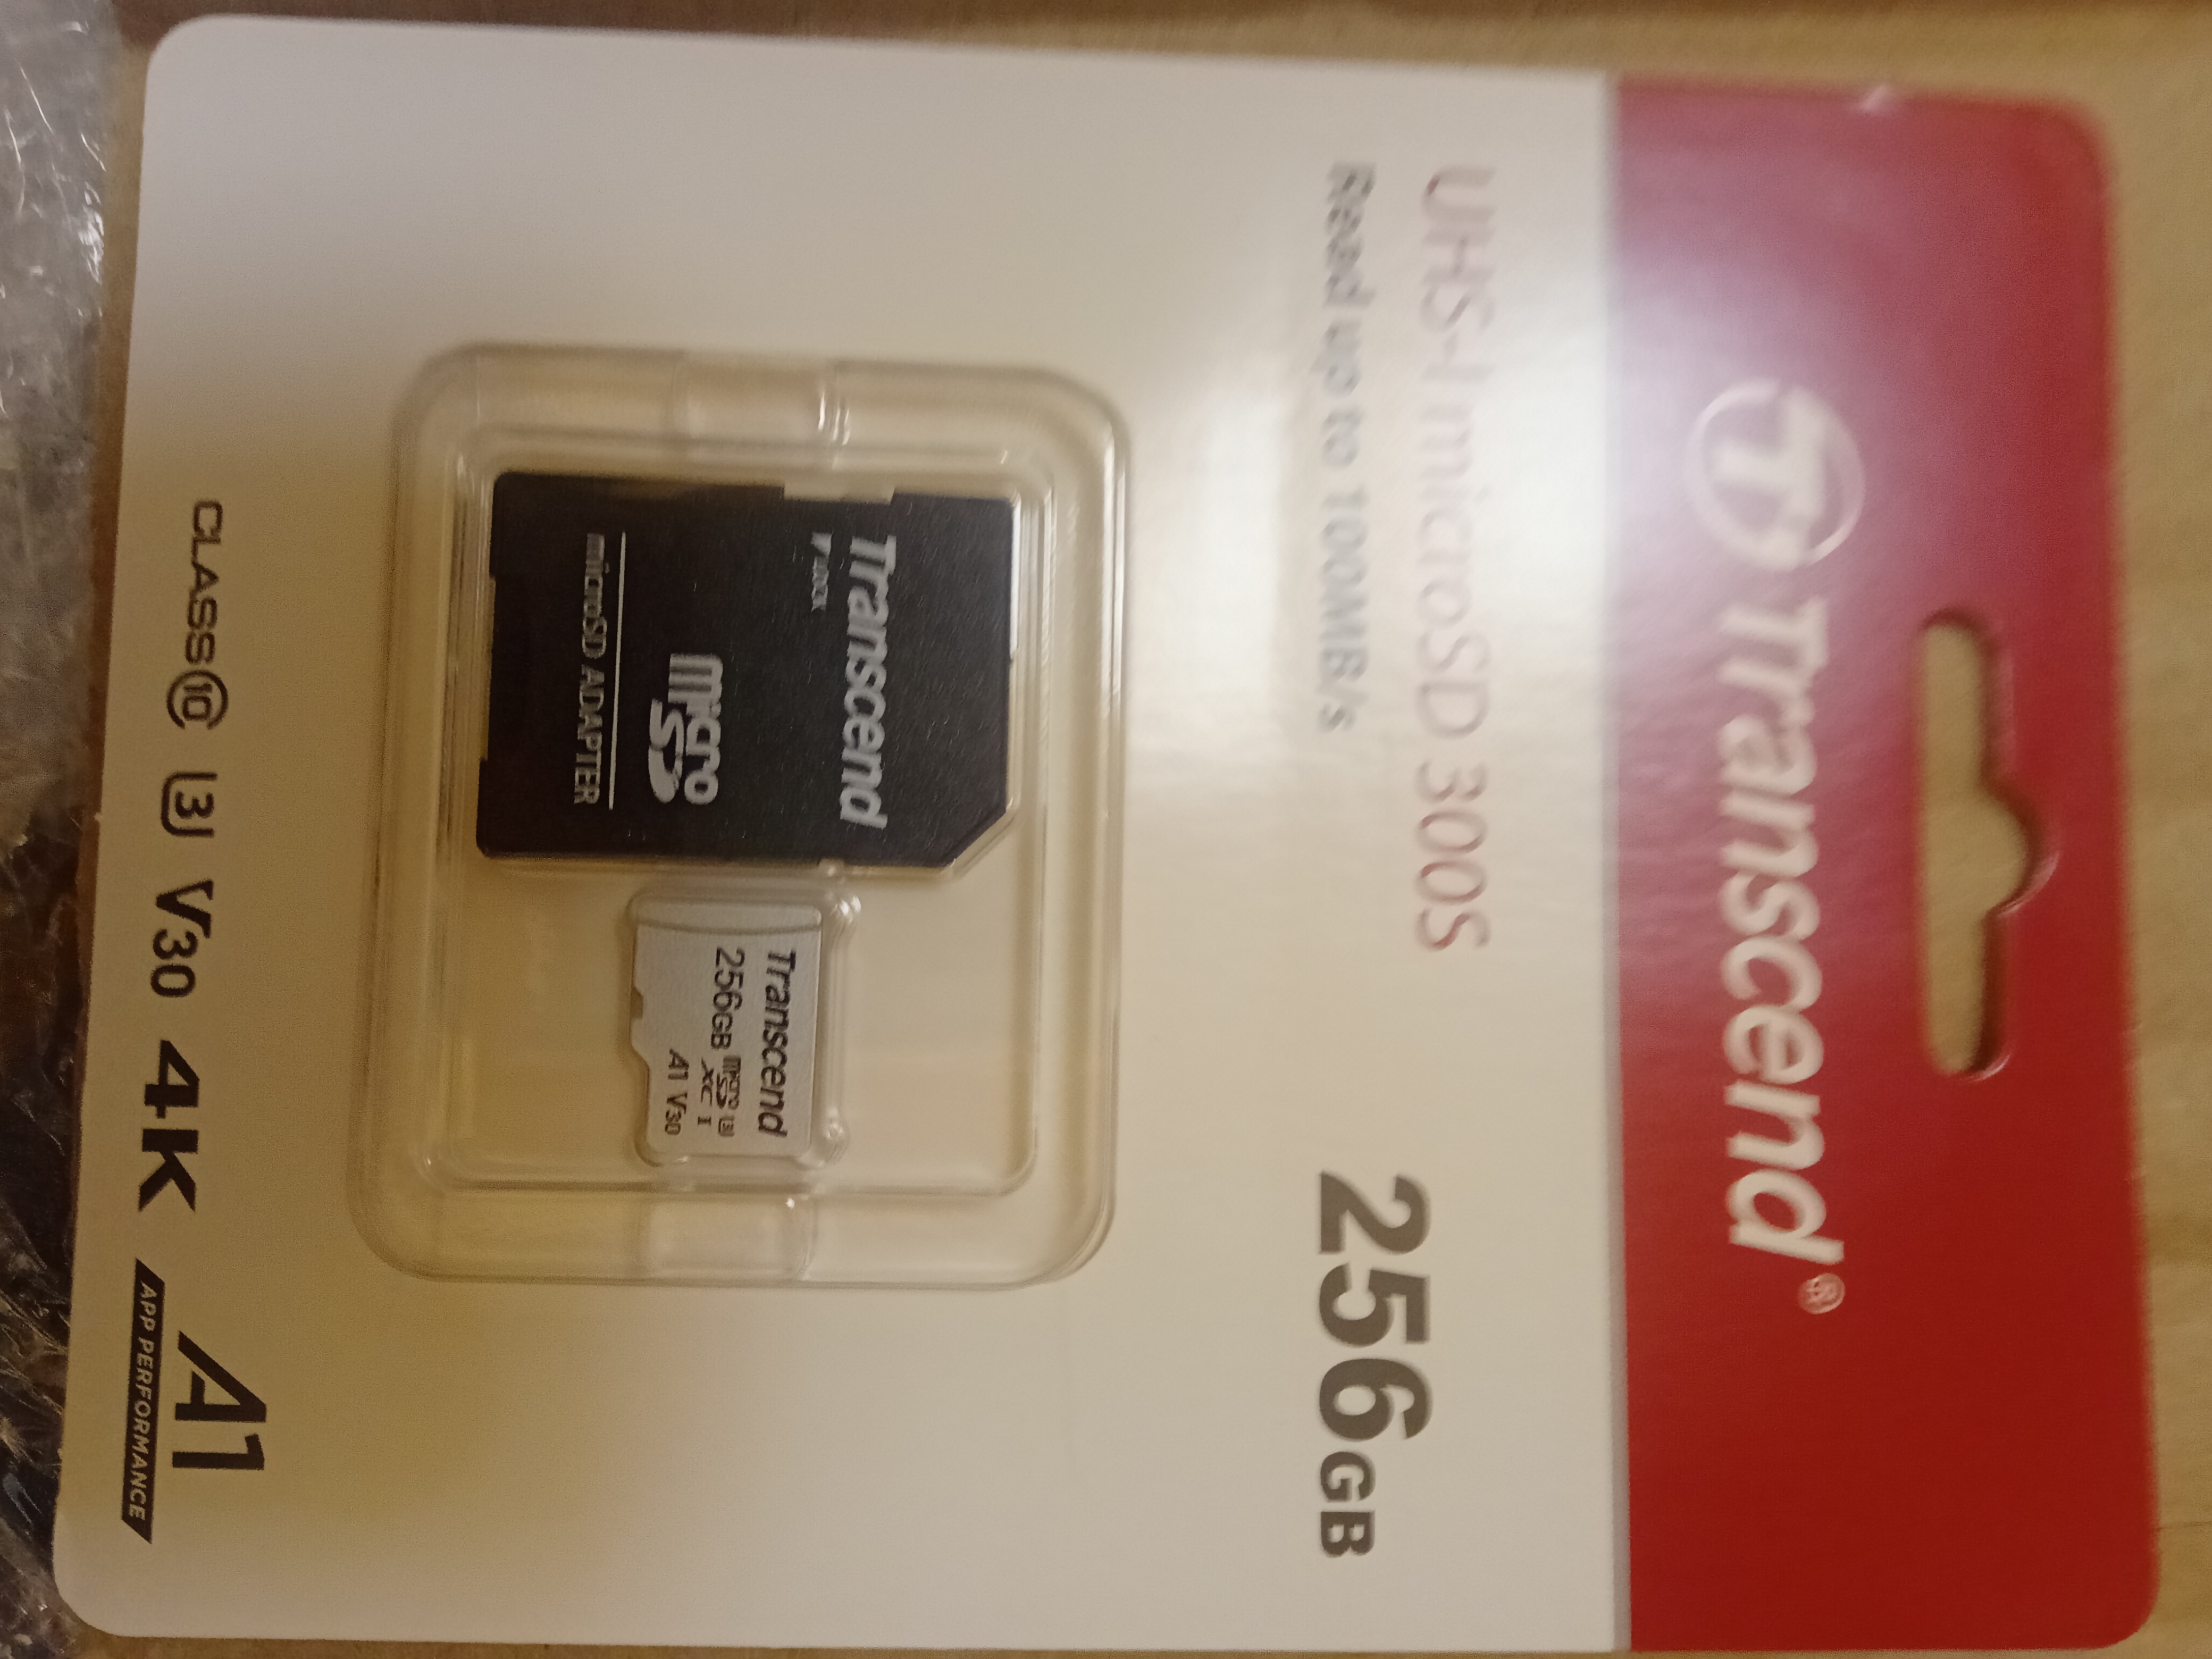 Transcend 256GB MicroSDXC/SDHC 300S Memory Card TS256GUSD300S  (TS256GUSD300S-A)